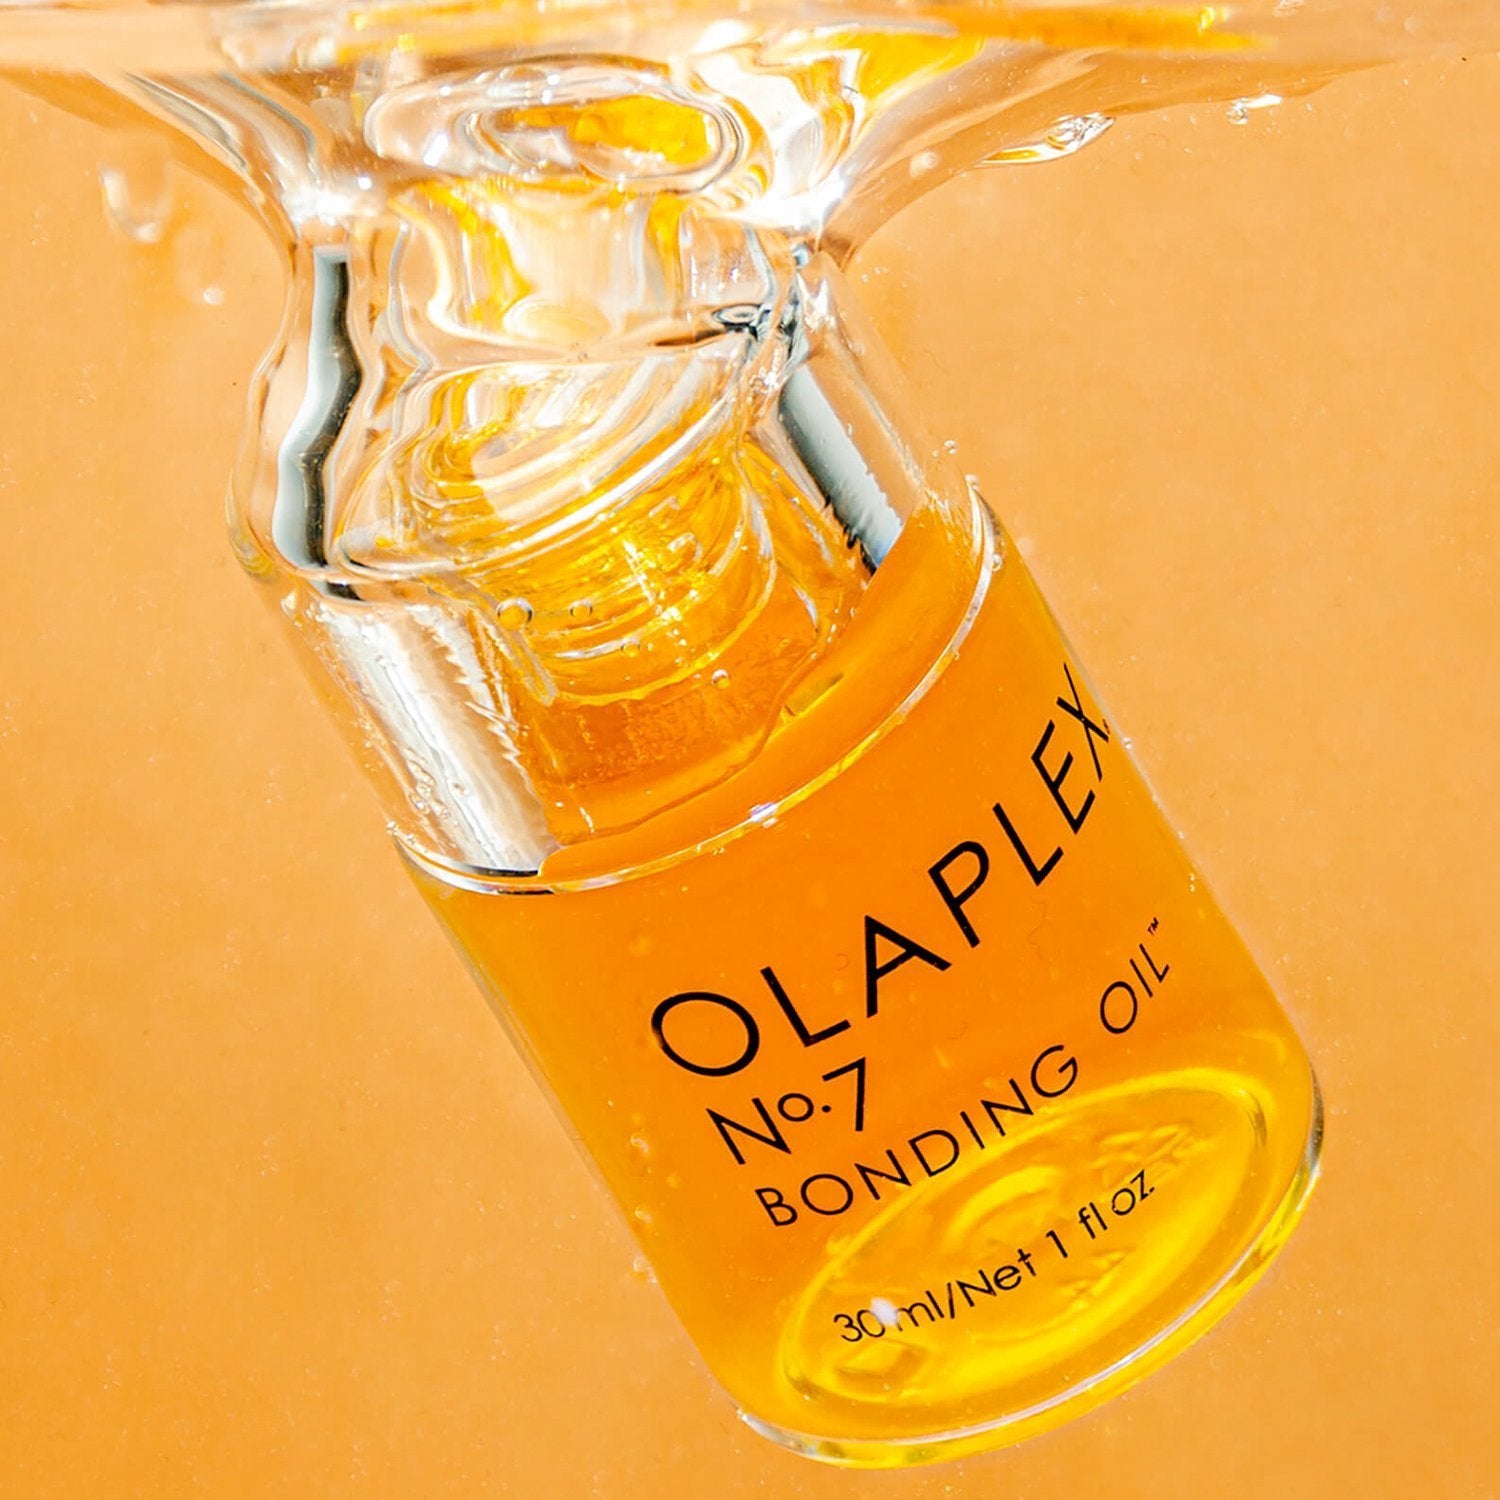 Olaplex Olaplex | No.7 Bonding Oil - SkinShop